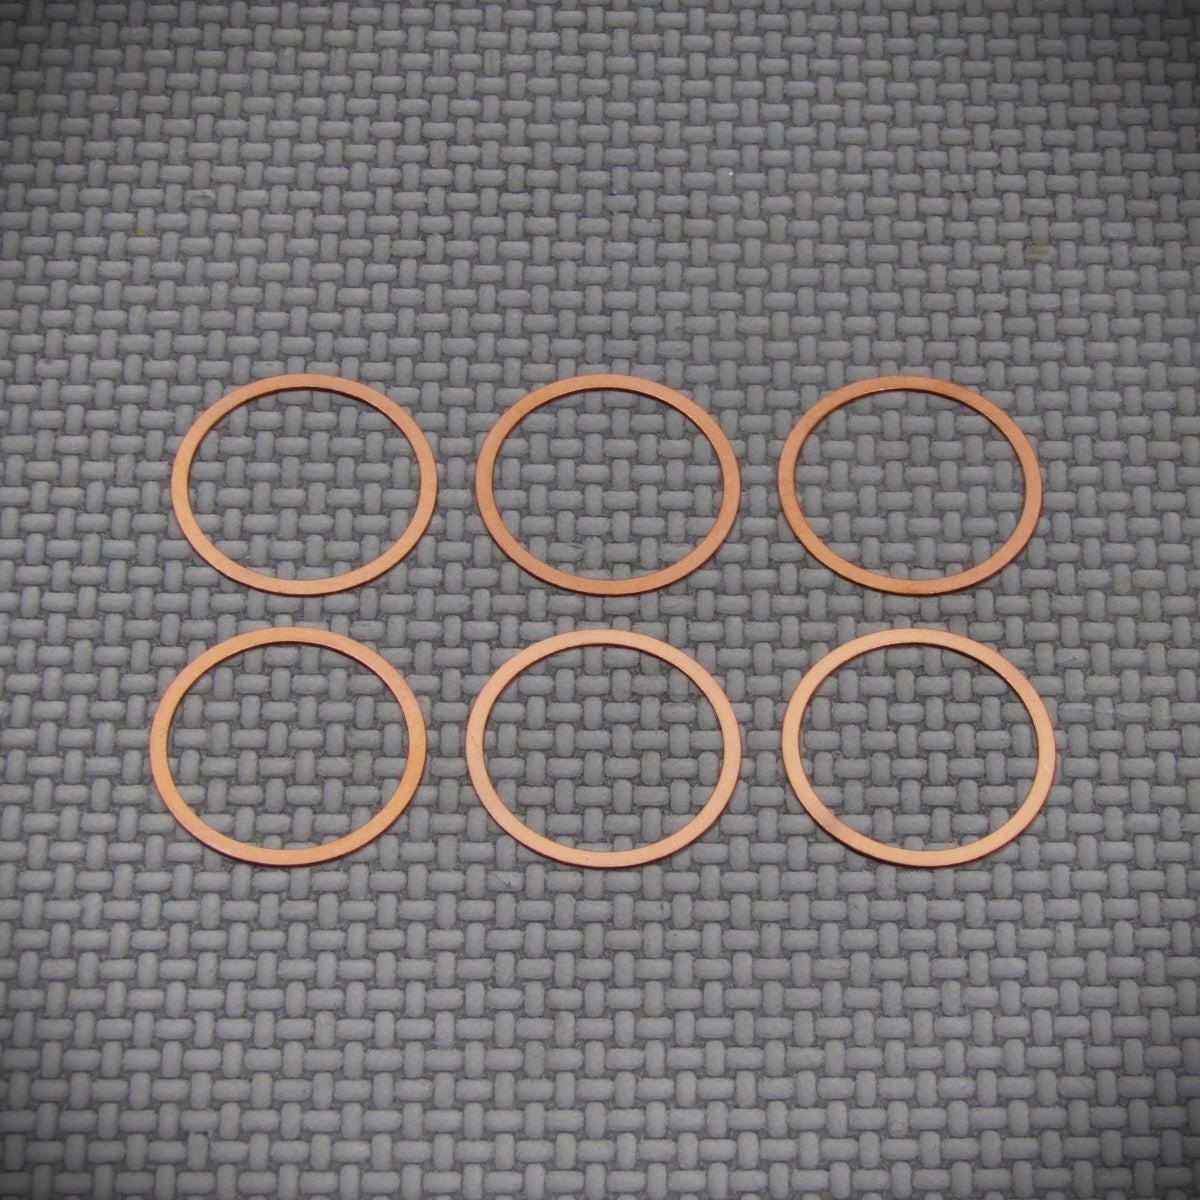 Mercedes OM605 OM606 prechamber copper sealing ring set